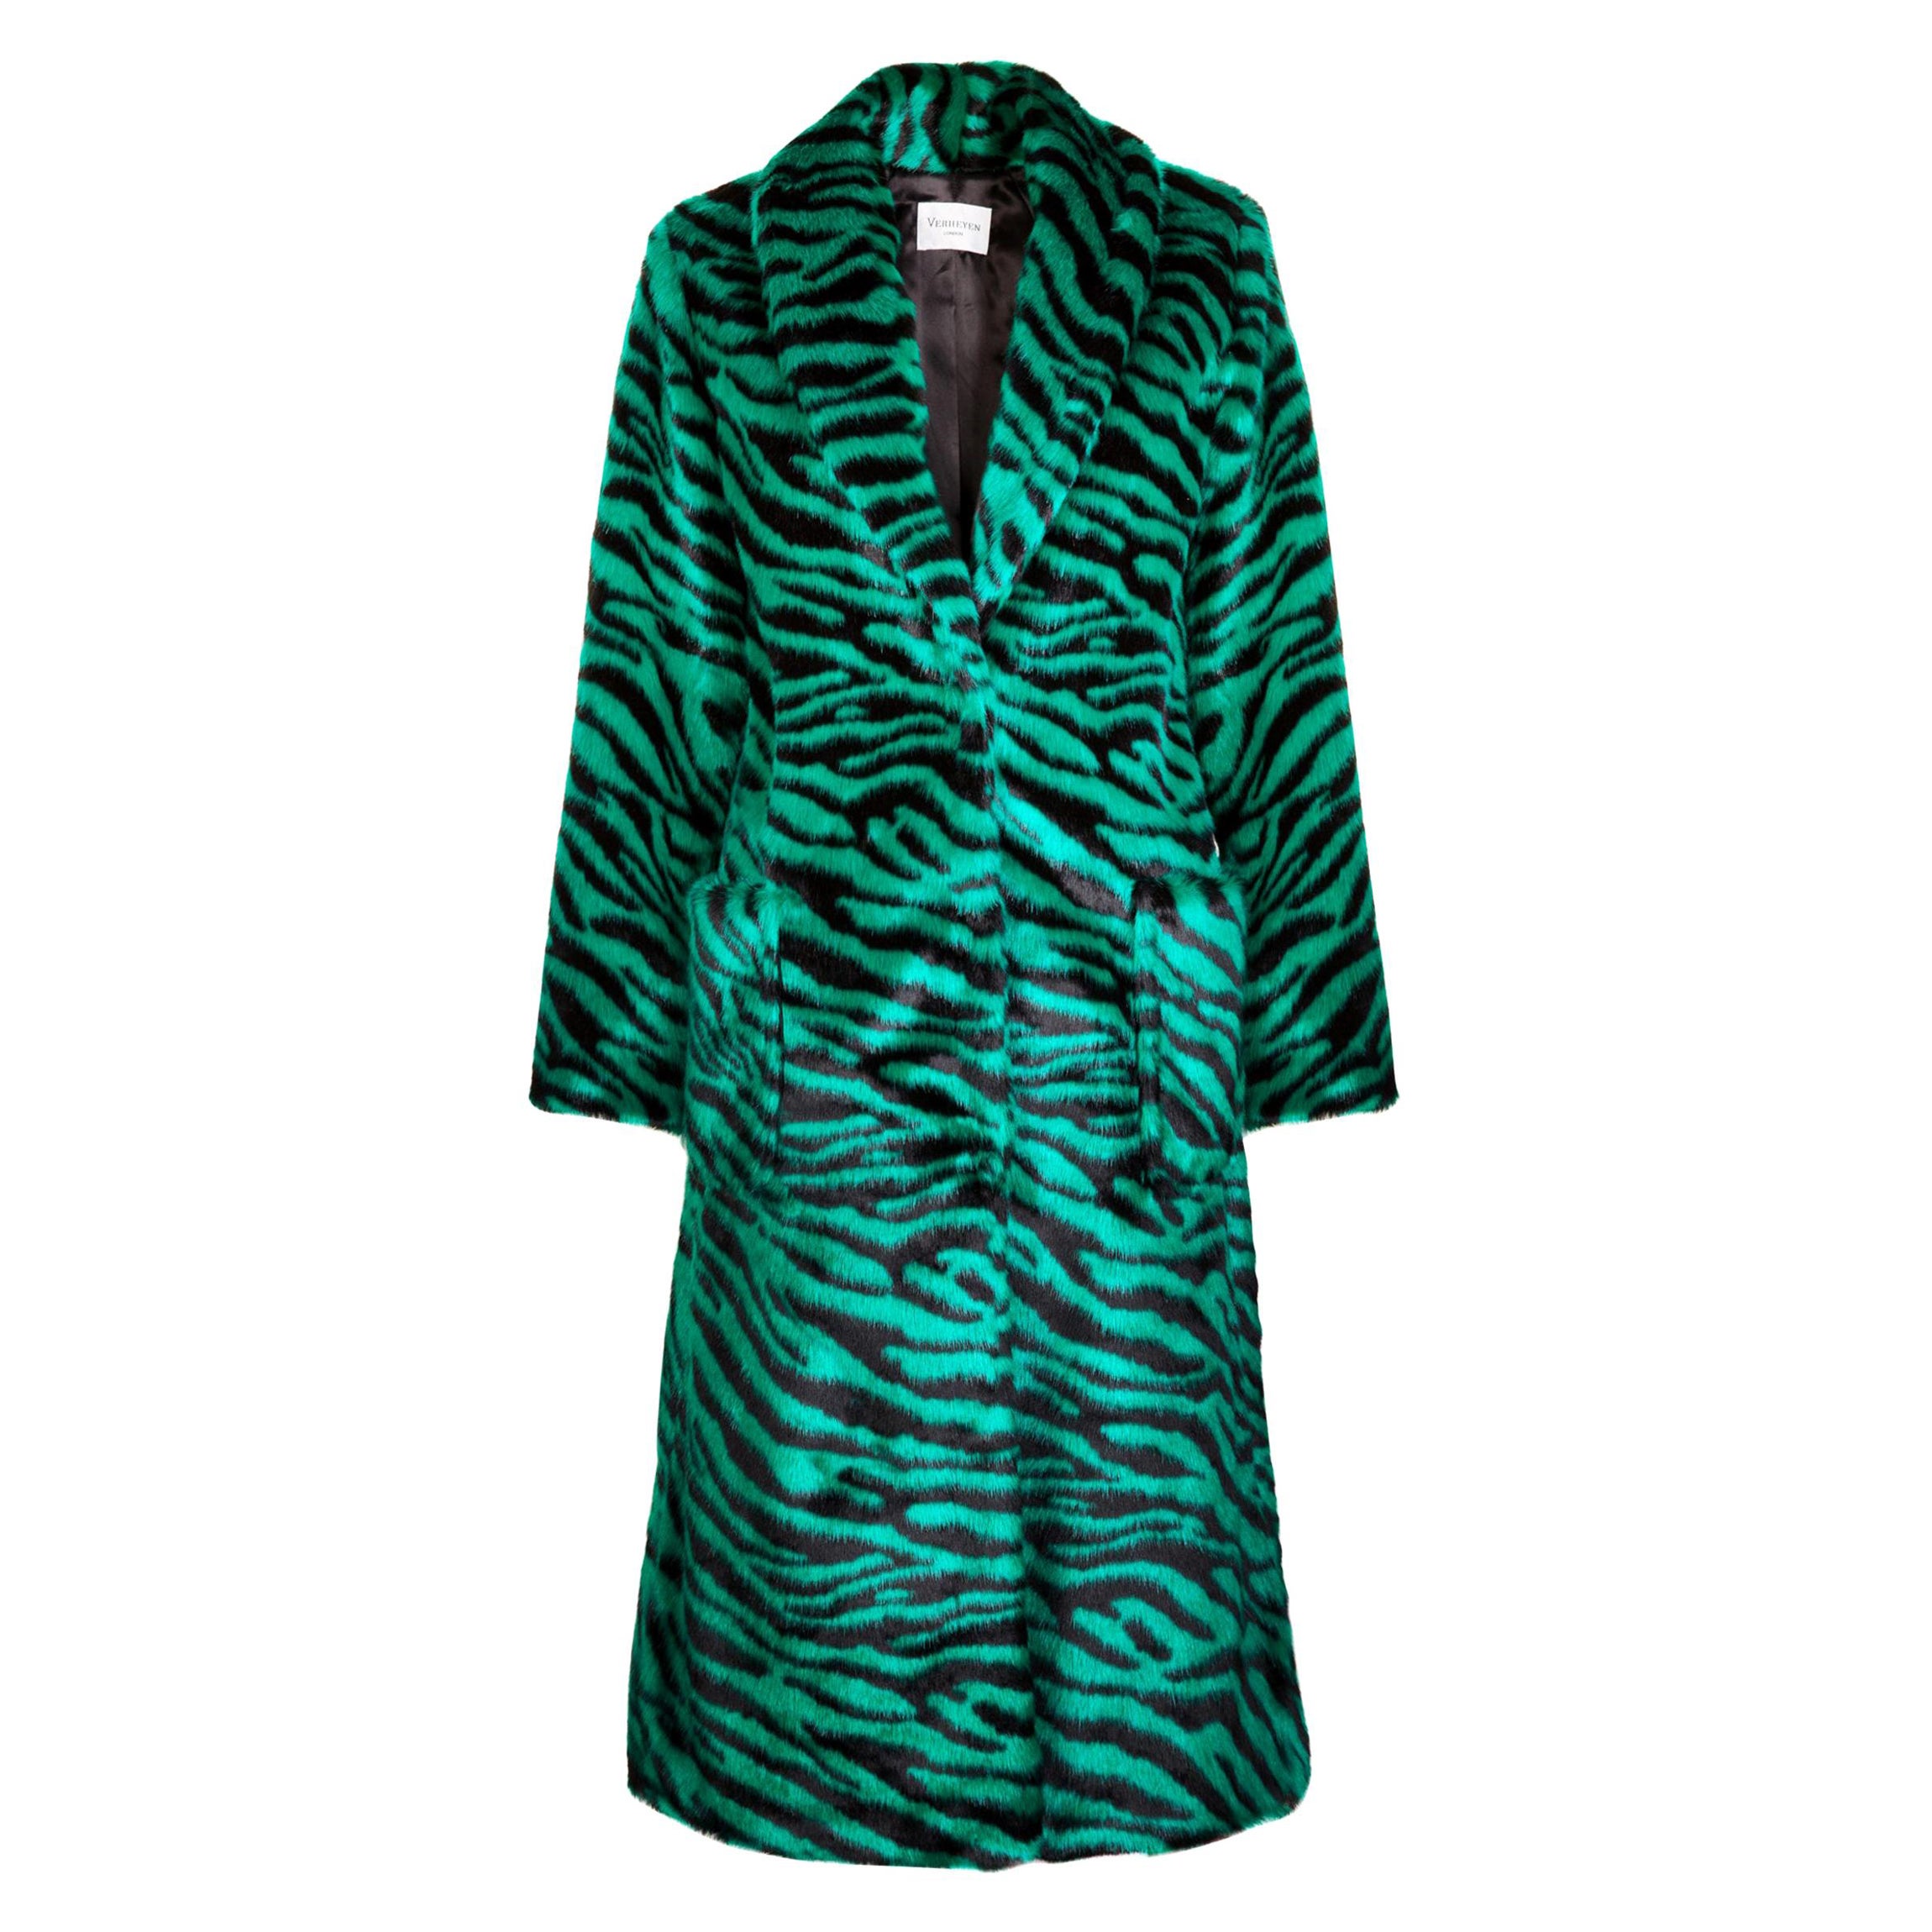 Verheyen London - Manteau en fausse fourrure vert émeraude à imprimé zébré Esmeralda, taille UK 8